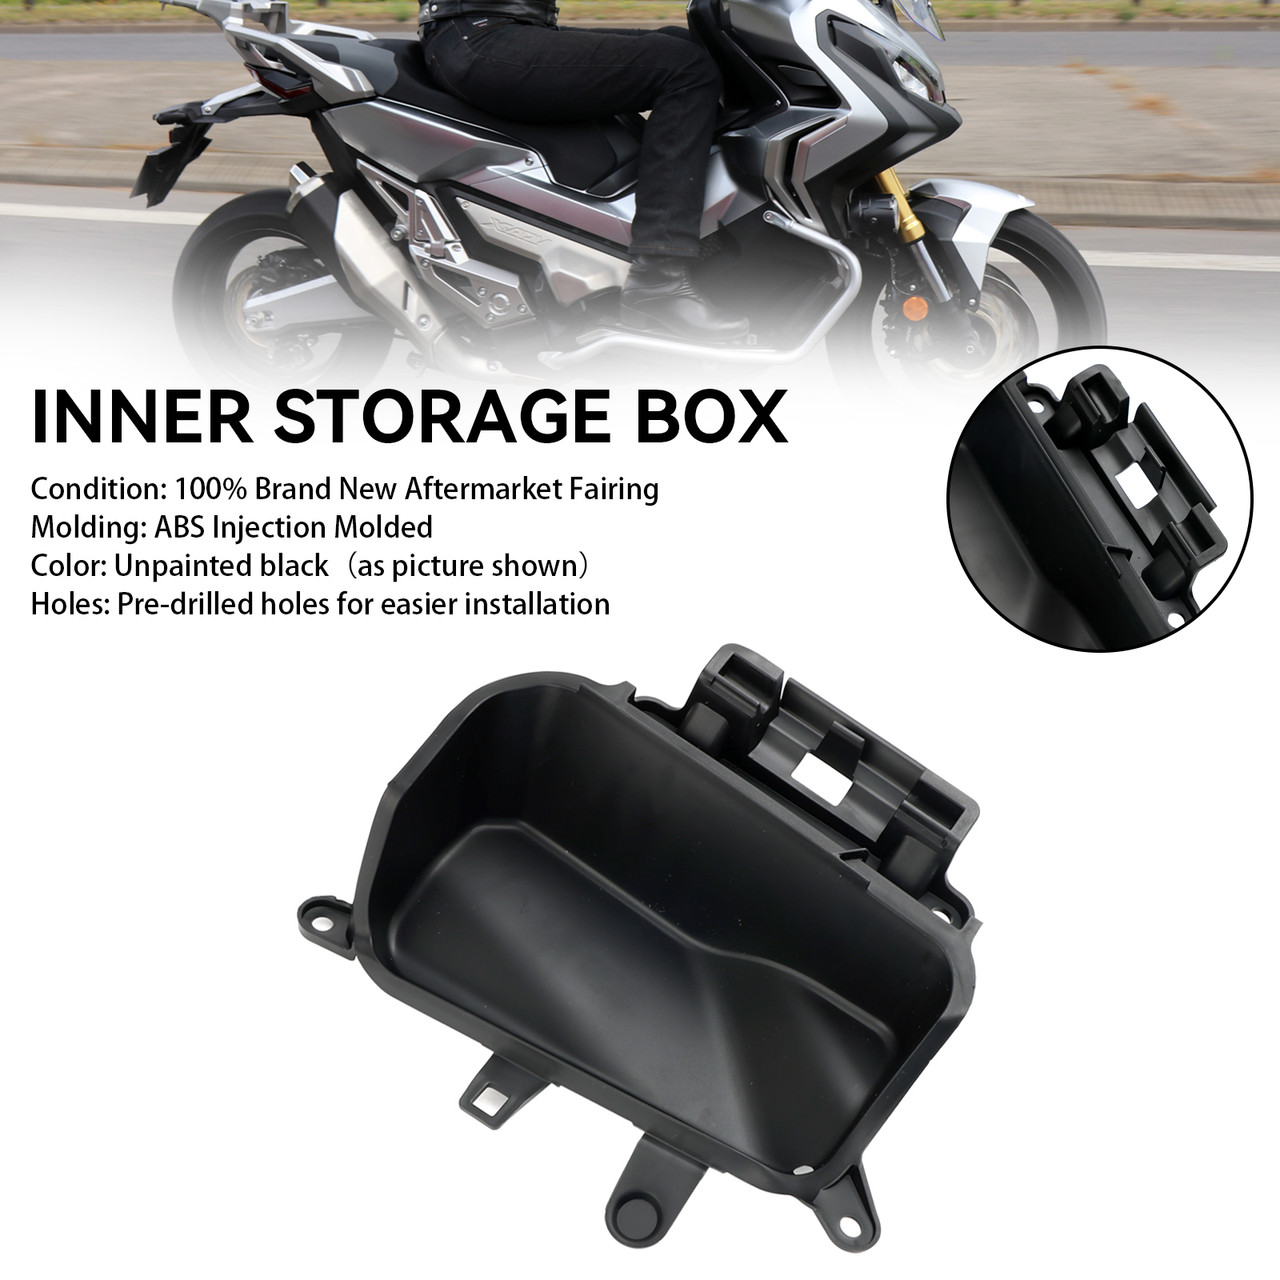 Unpainted Inner Storage Box Cover Case For Honda X-ADV 750 2021-2023